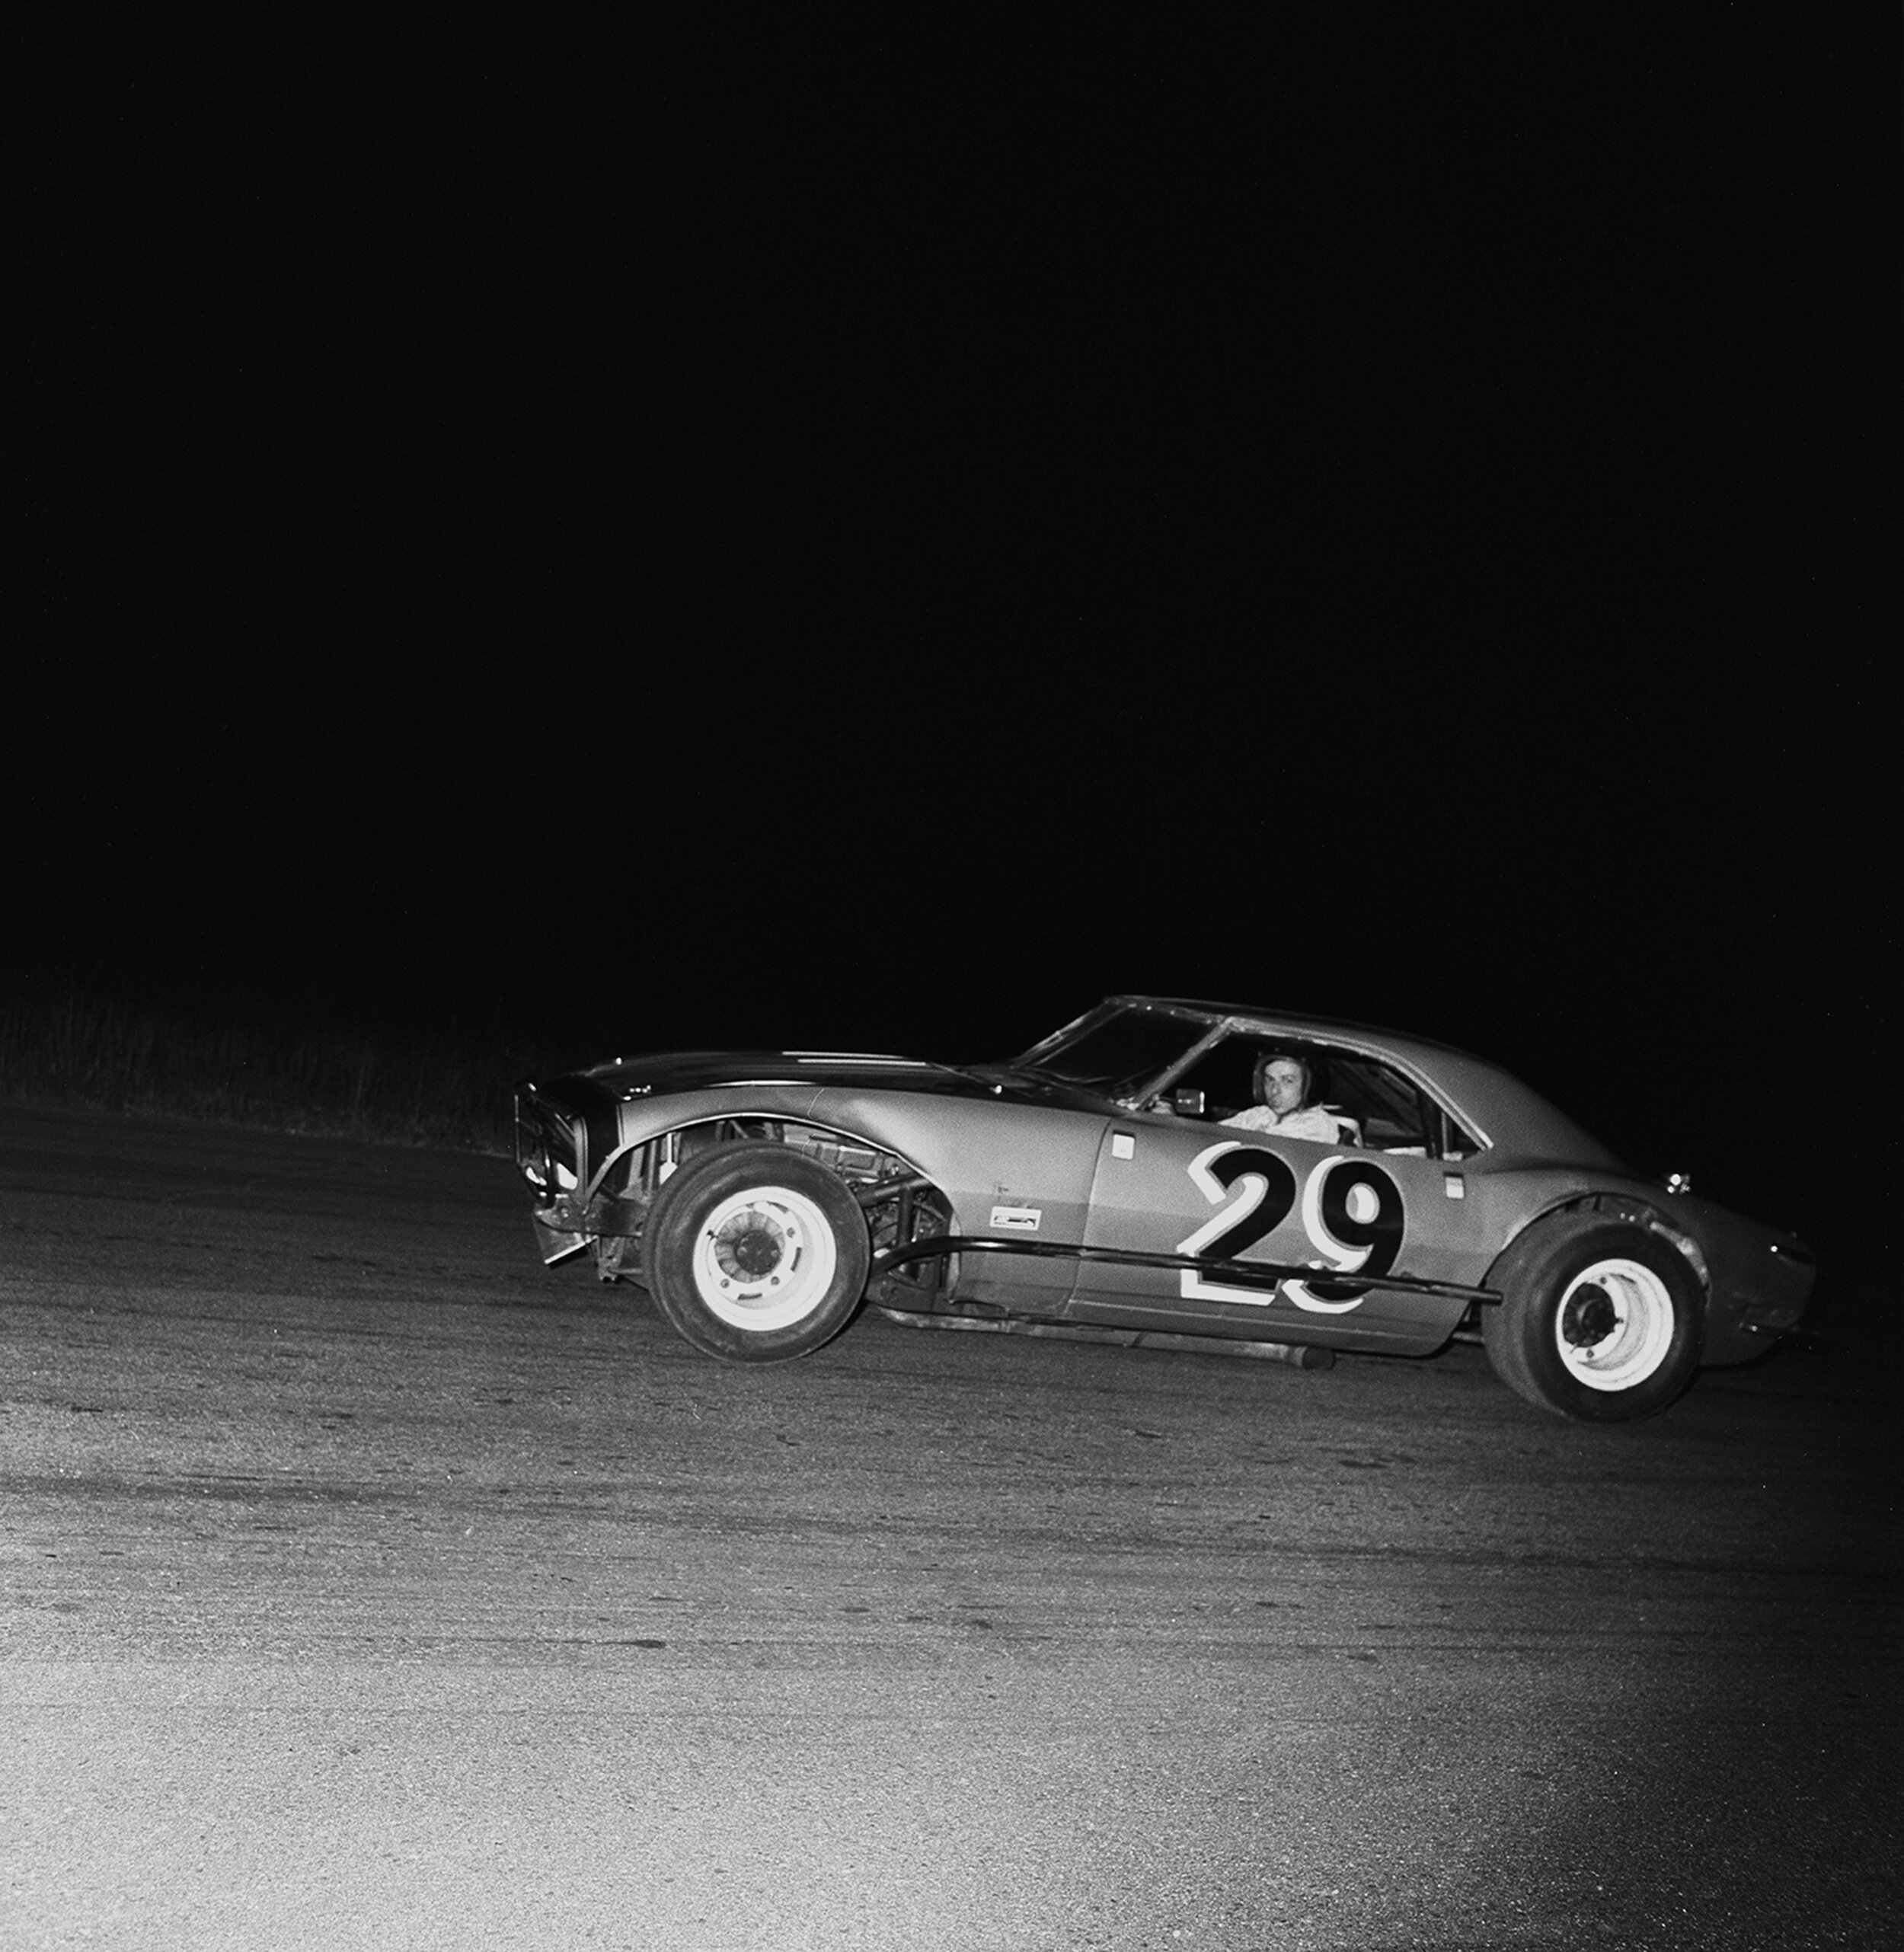 Car #29, Thompson Speedway, Thompson CT, 1972.